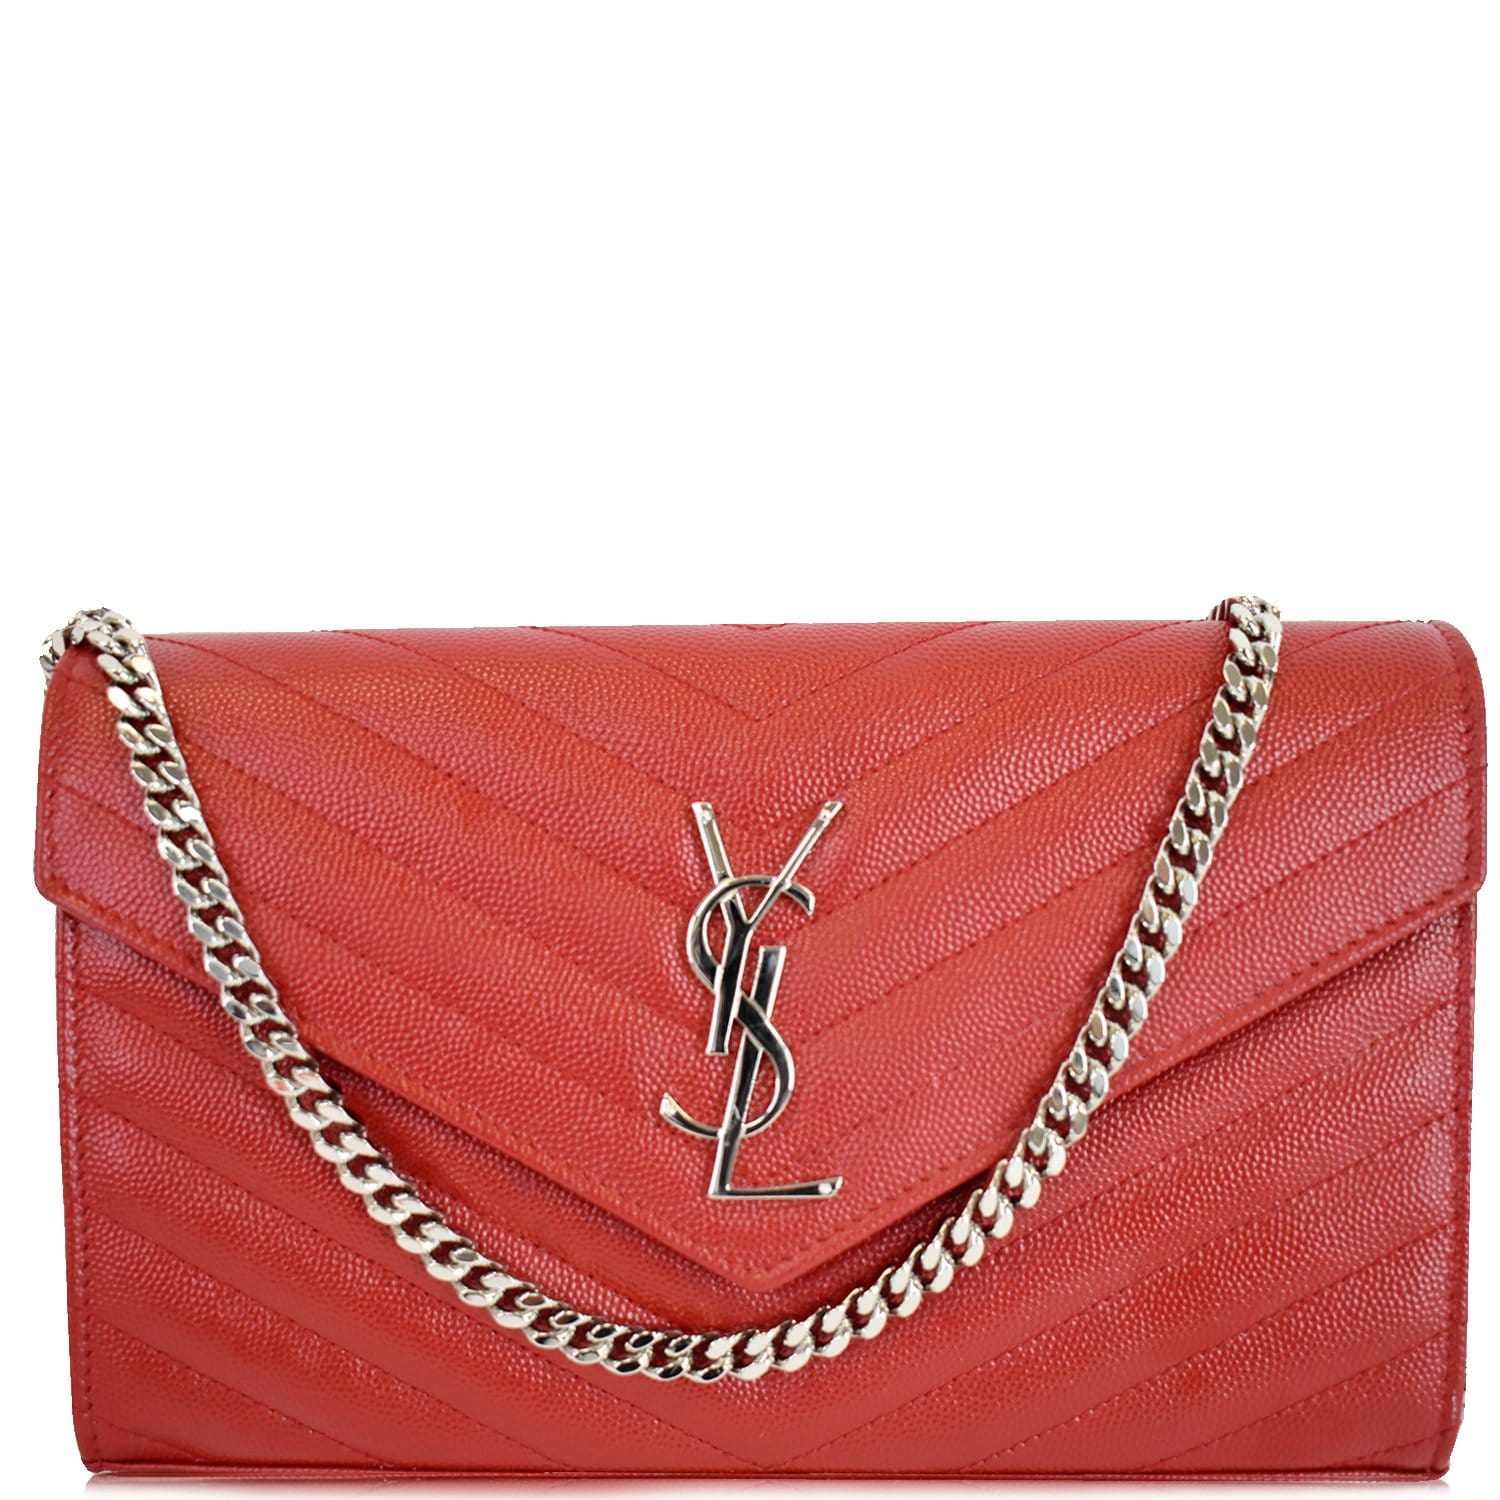 YSL Yves Saint Laurent Red Wallets for Women